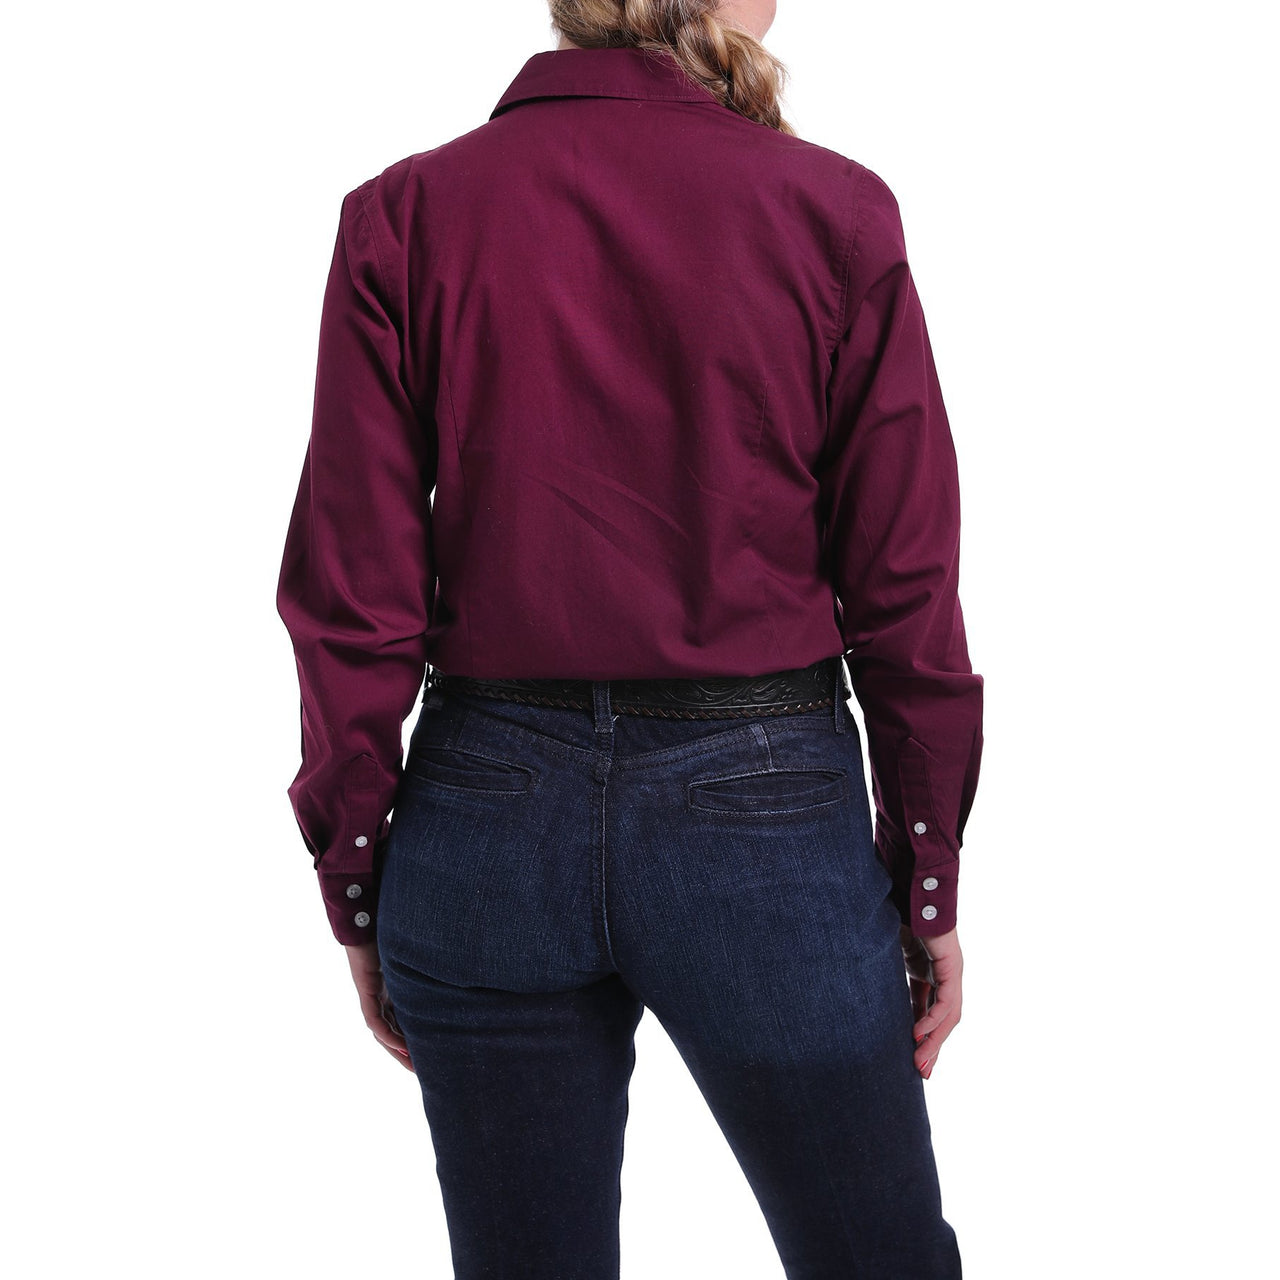 Cinch Women's Long Sleeve Shirt - Burgundy